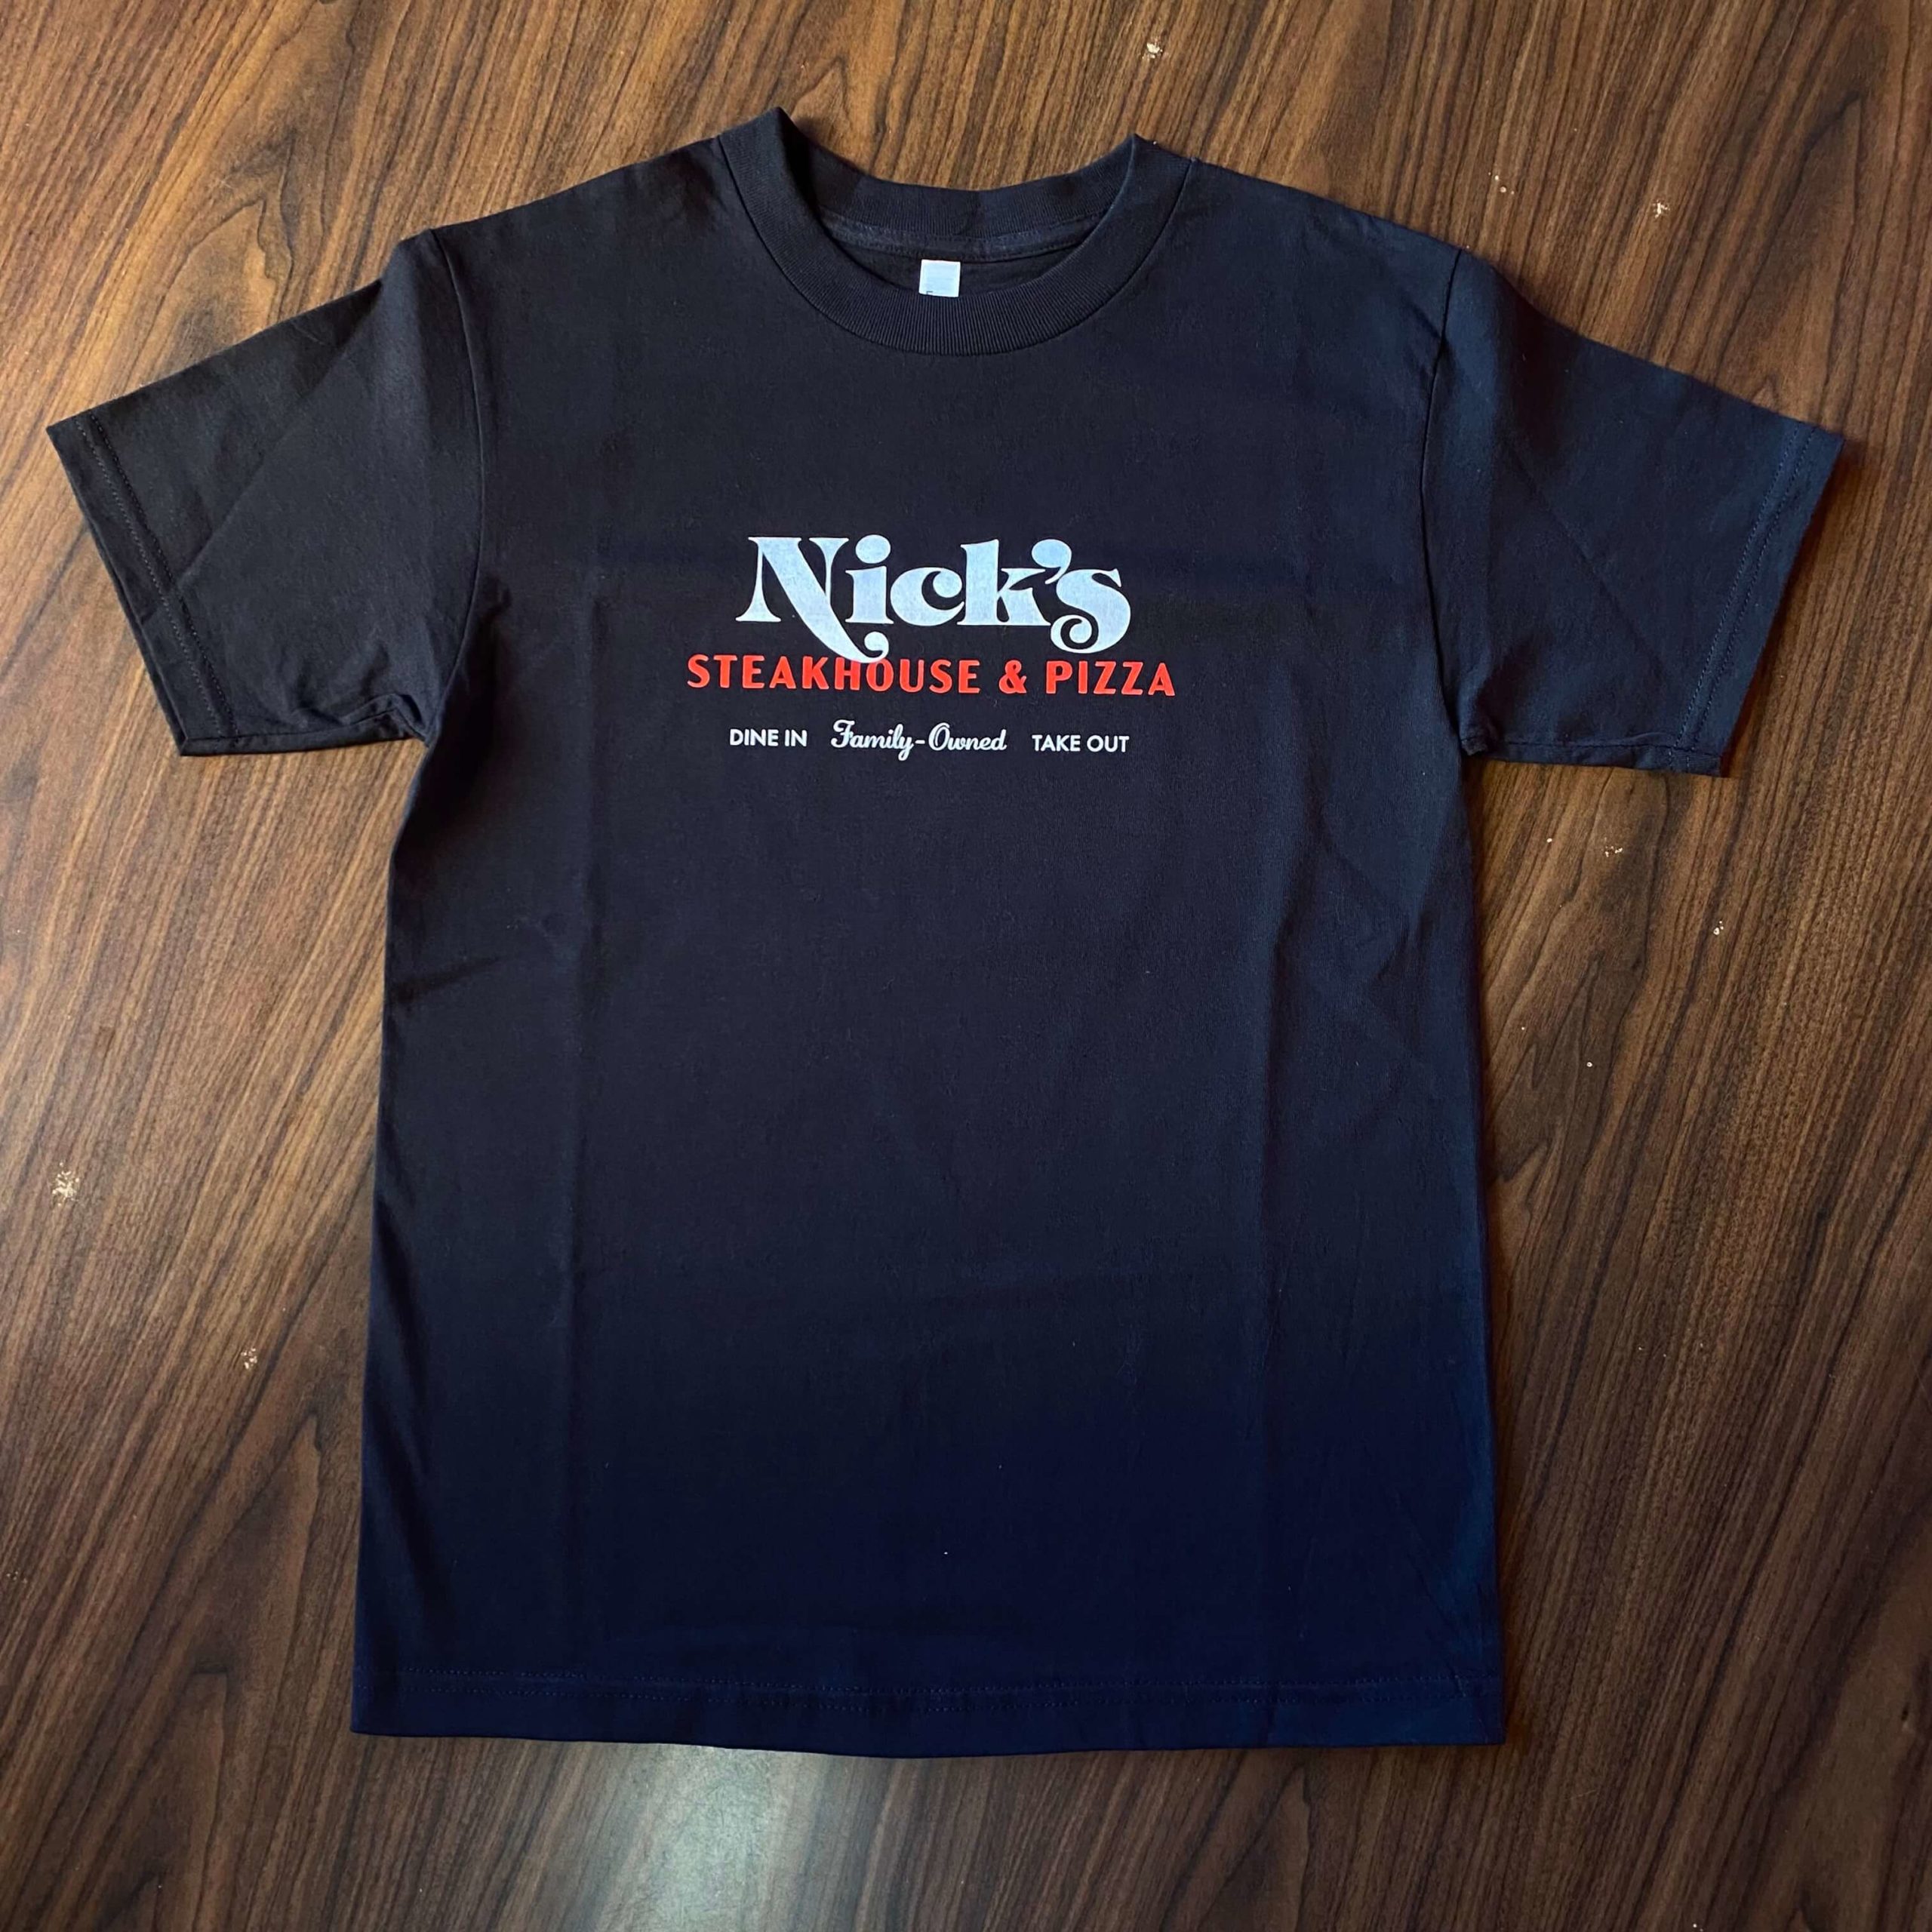 Nick's Merchandise - Nick's Steakhouse & Pizza